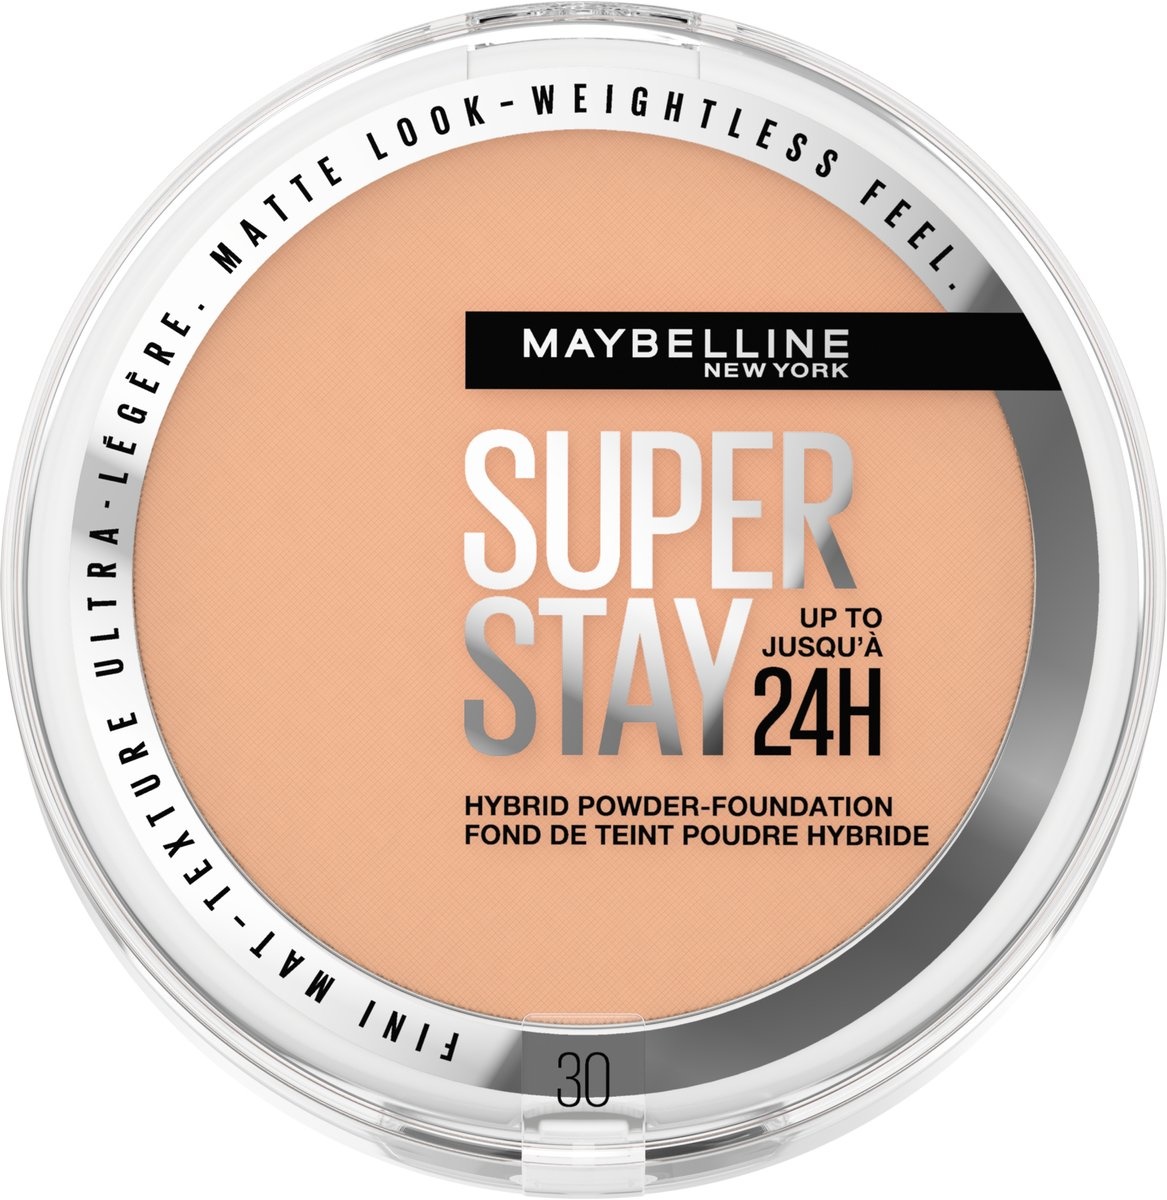 Maybelline New York - Fond de teint poudre hybride SuperStay 24H - 30